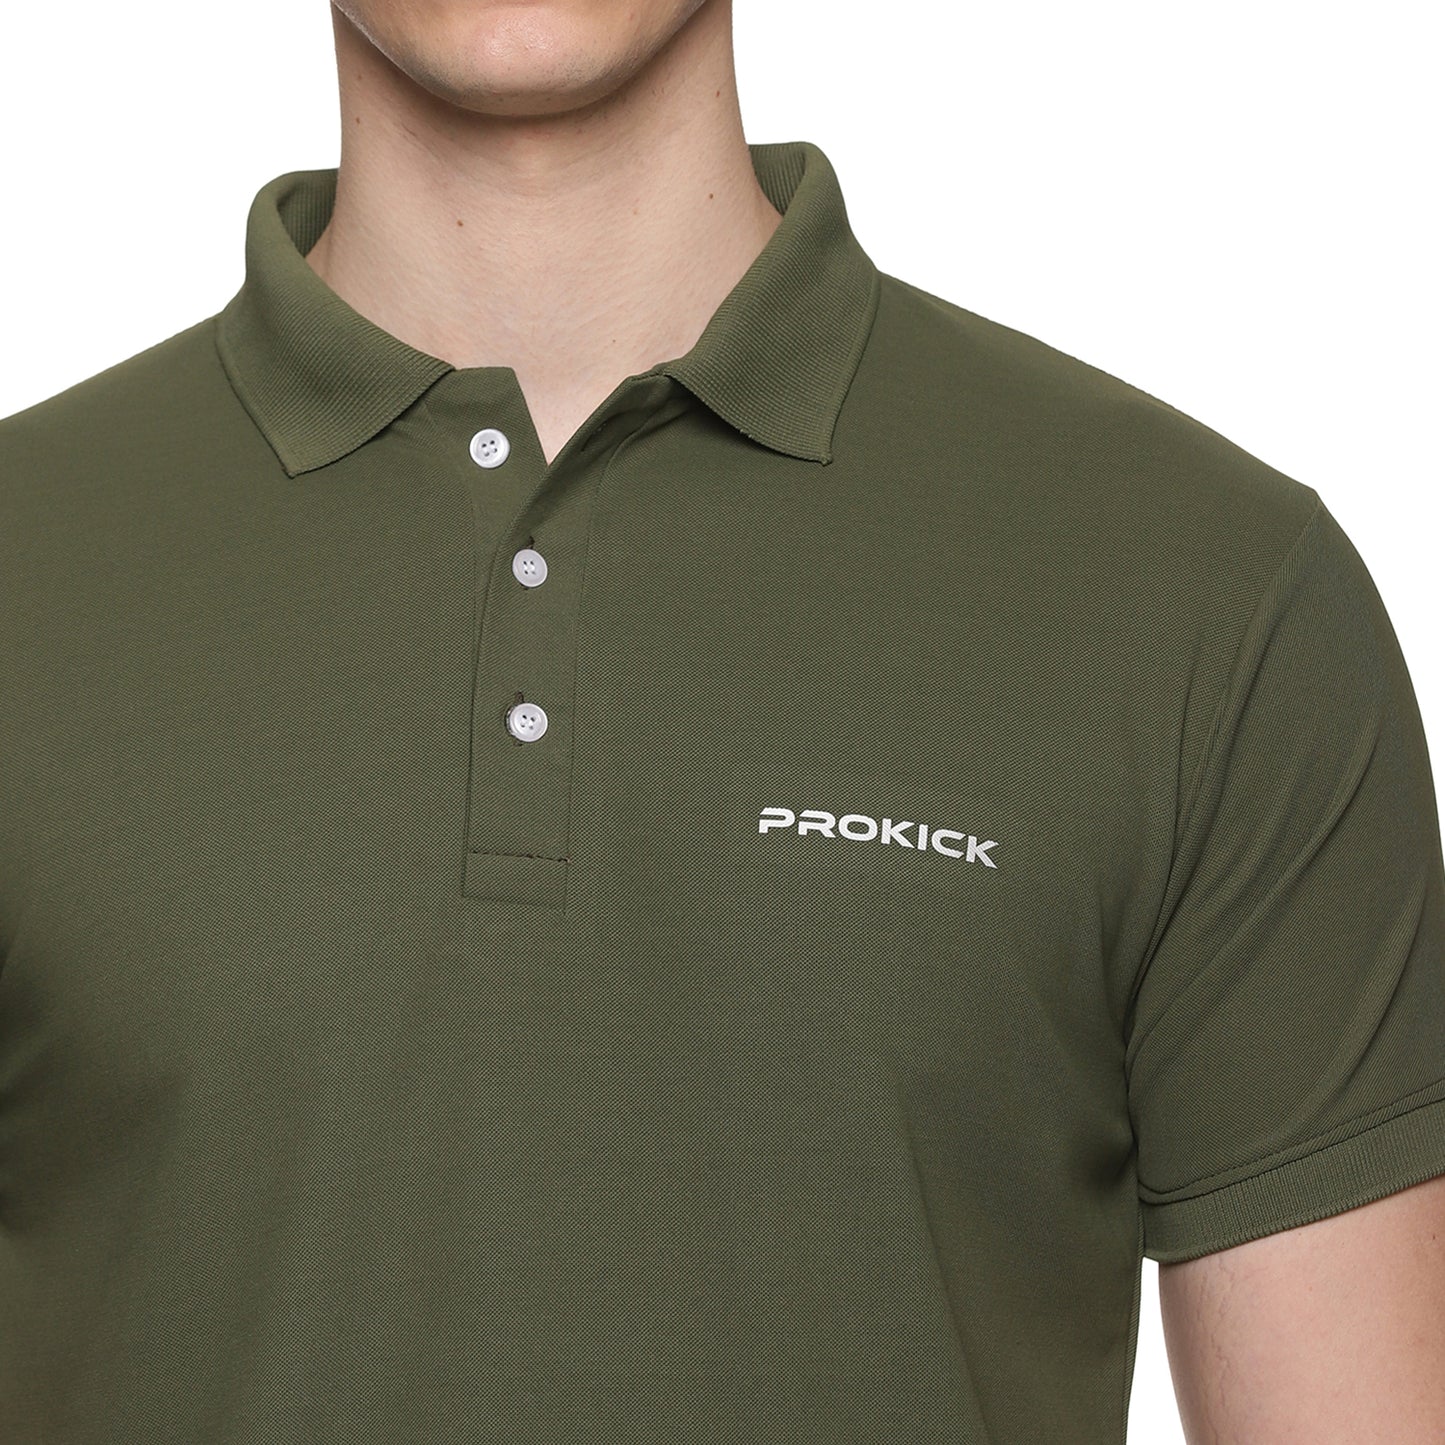 Prokick 2Way Plain Polo Neck Half Sleeves Badminton T-Shirt - Best Price online Prokicksports.com